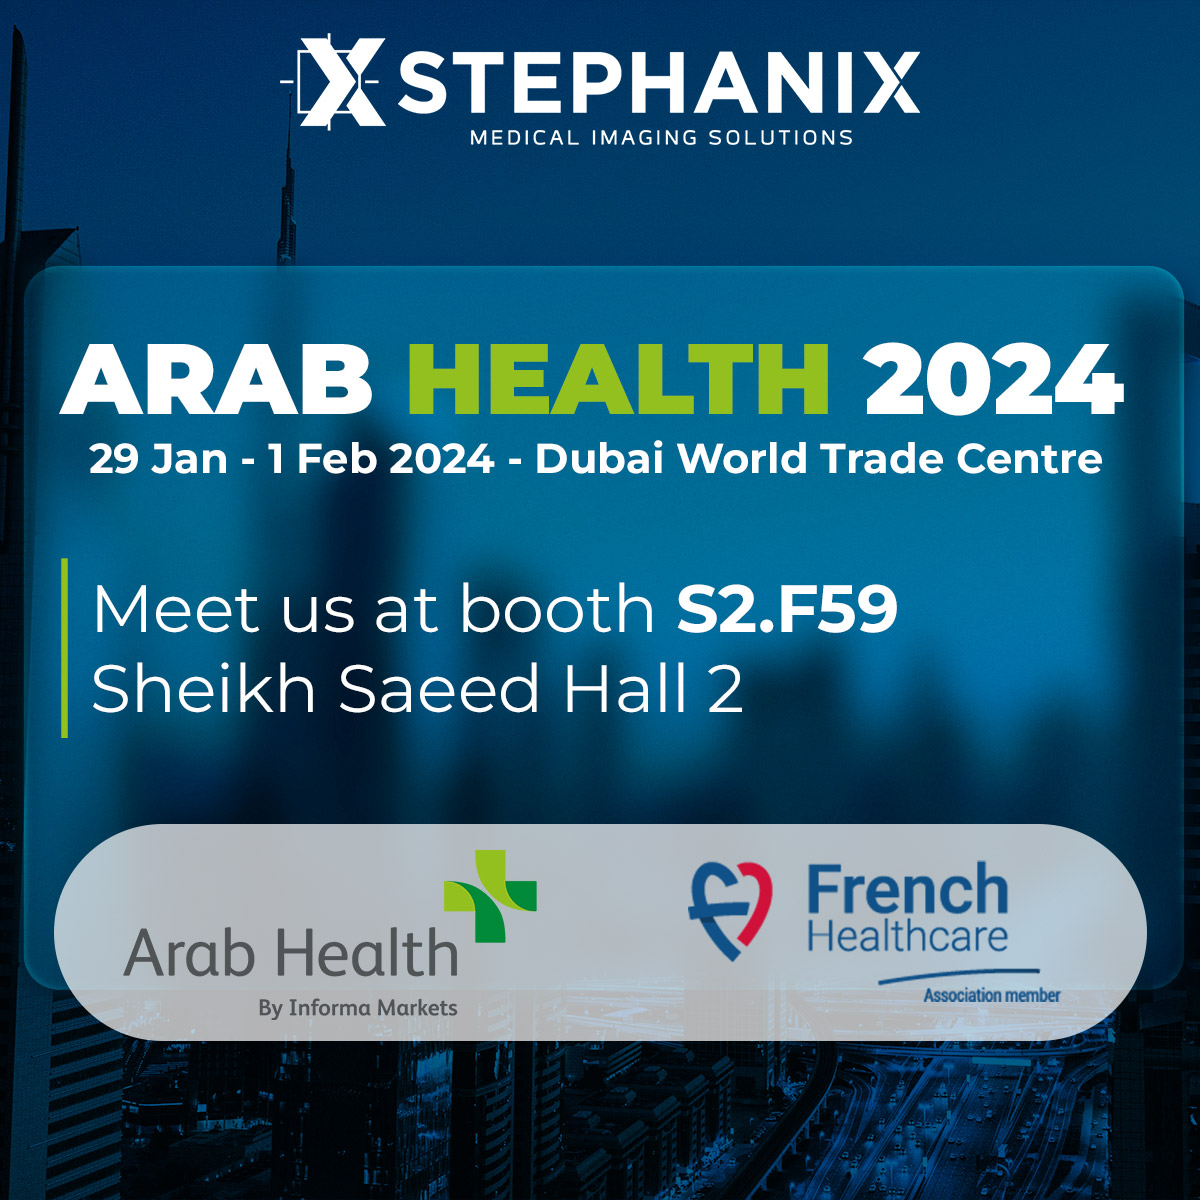 Arab Health 2024 Stephanix